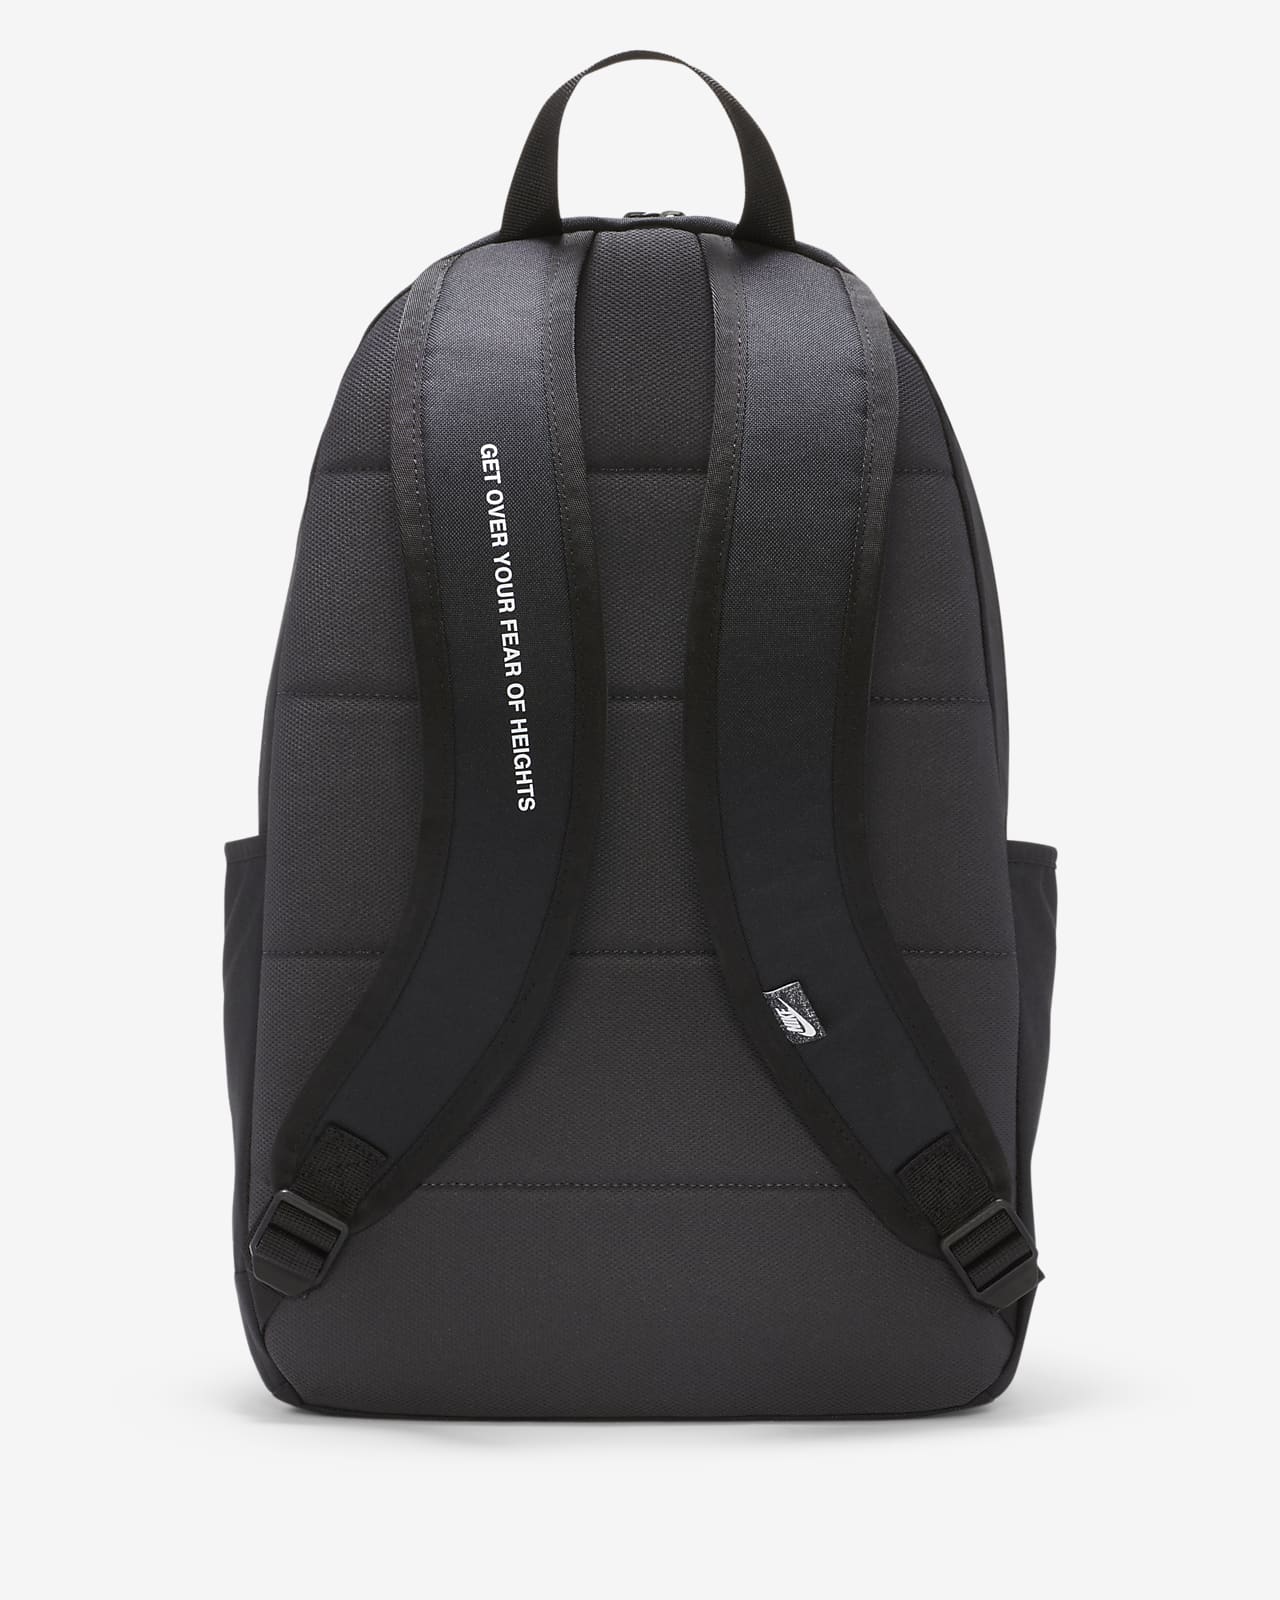 Dry Sack - Wetsuit Bag – Dry Tube Bag – 30L | OverBoard